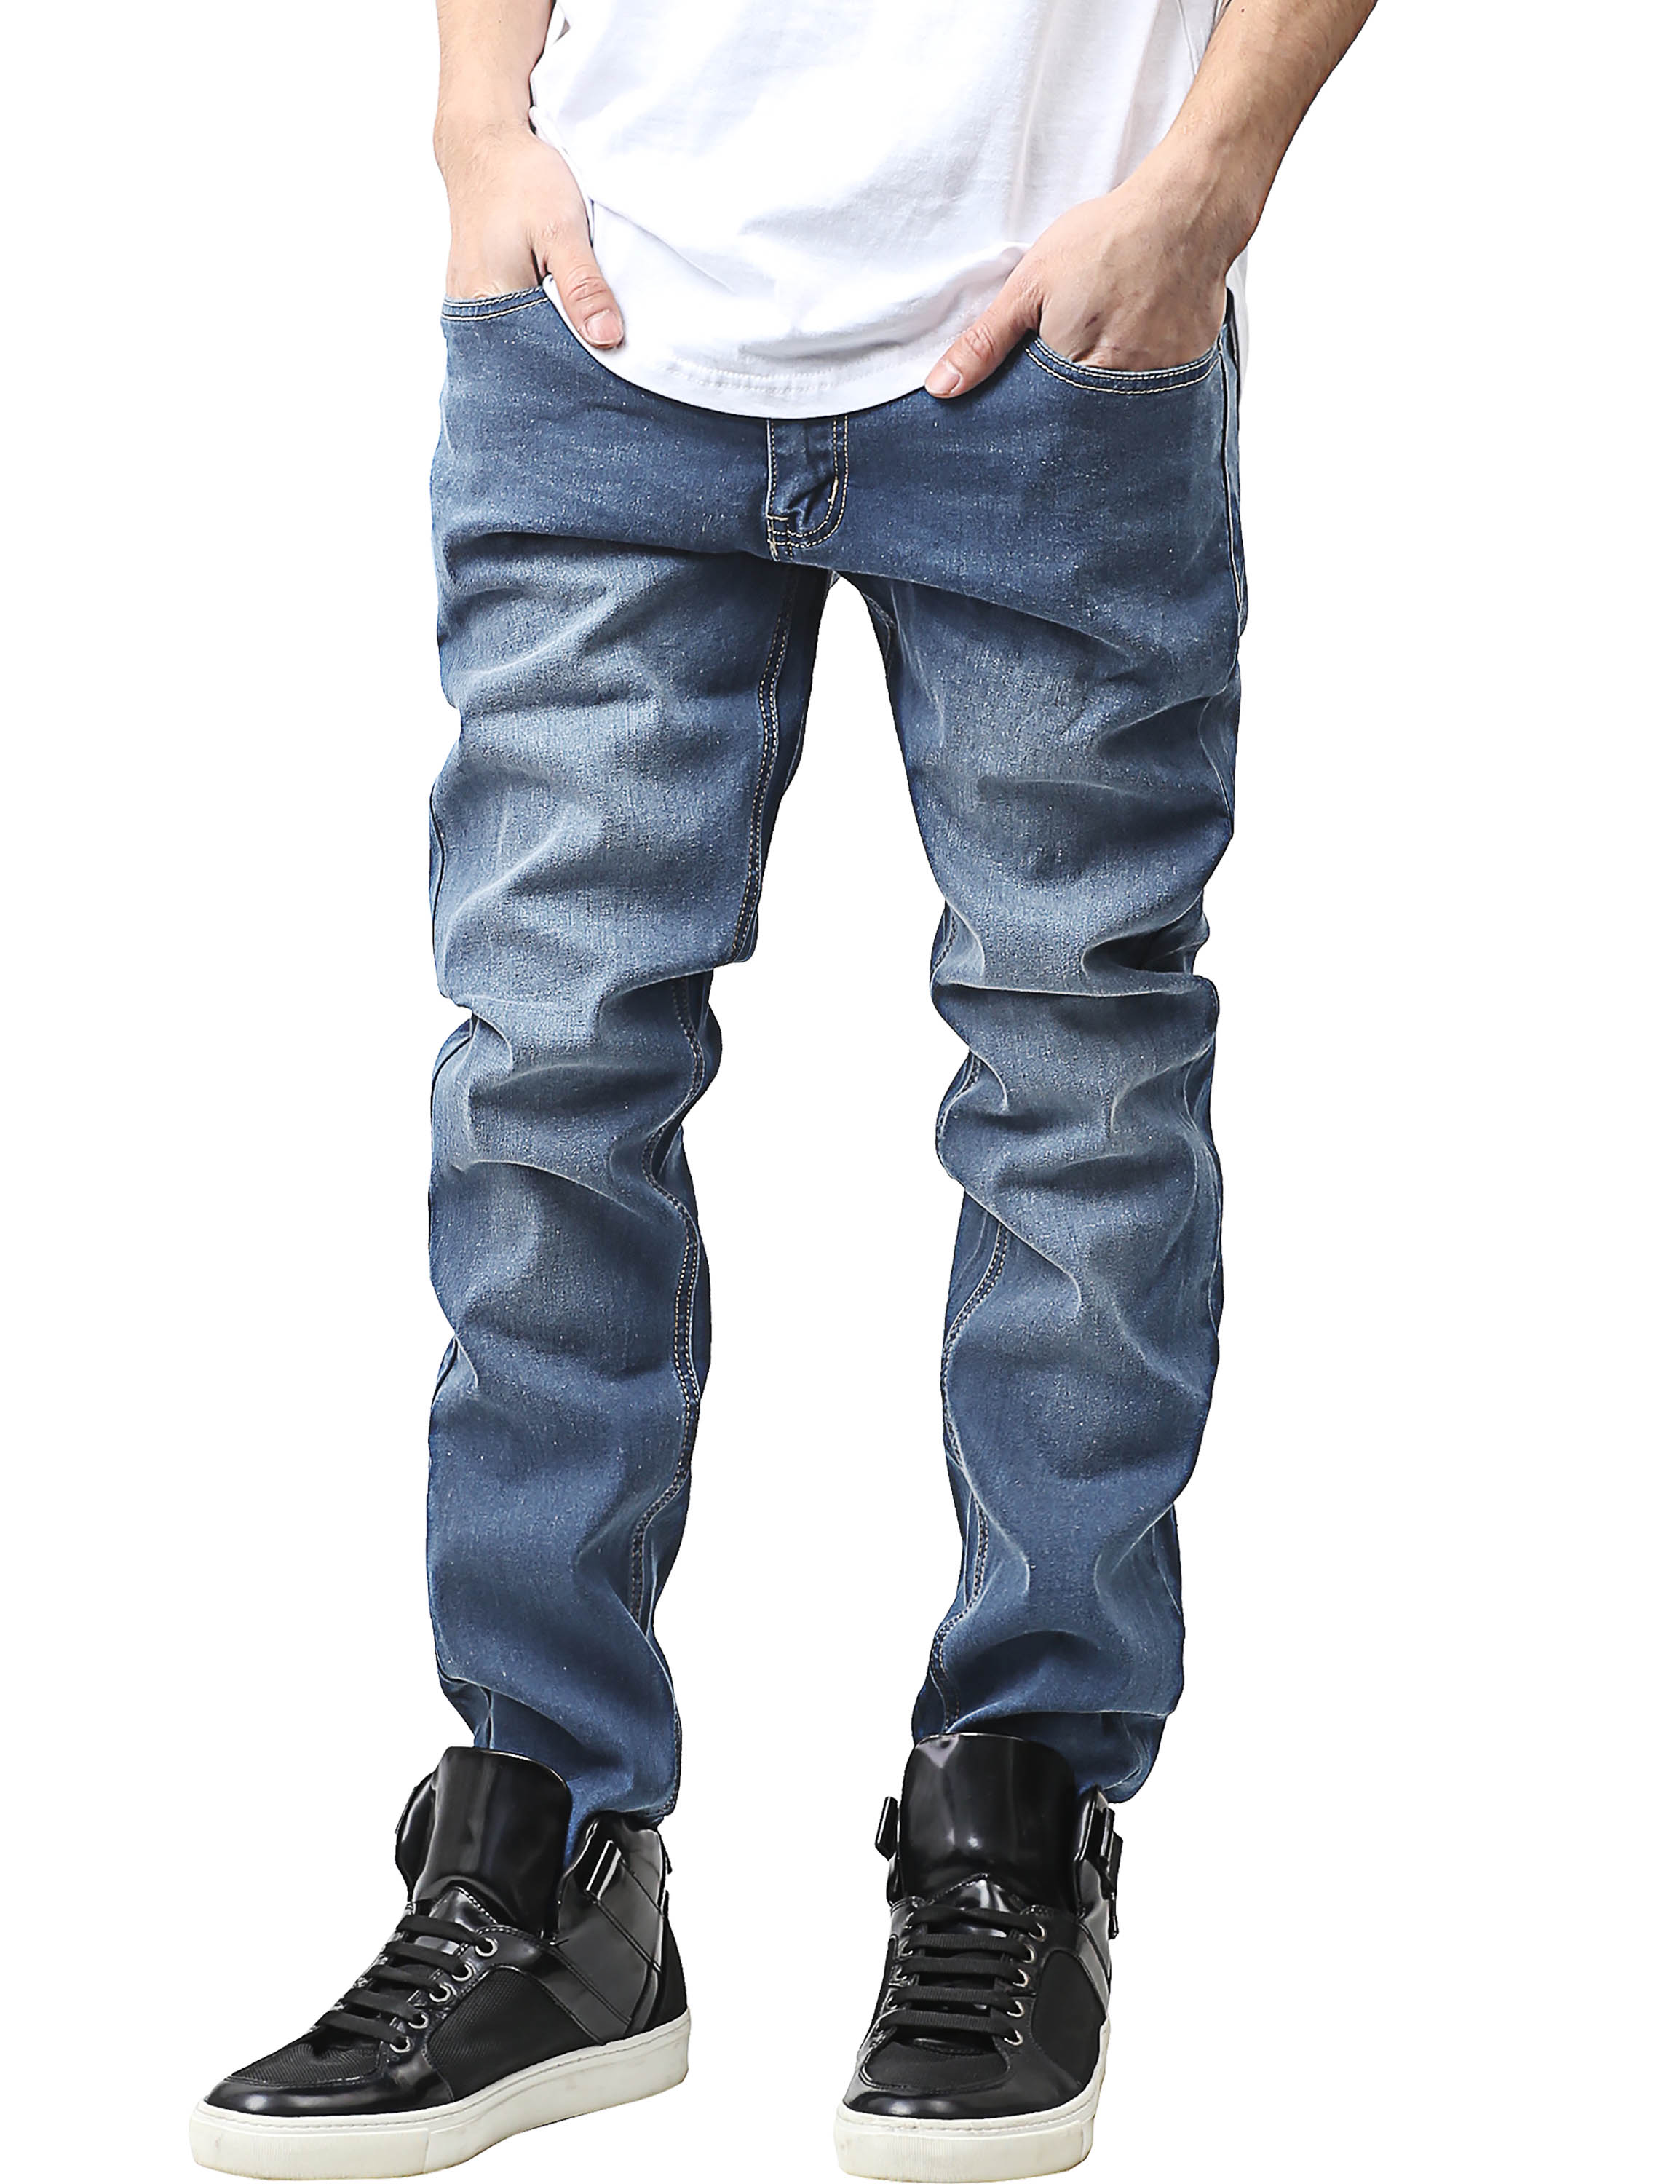 Mens Skinny Jeans Stretch Skinny Fit Slim Denim Pants - image 1 of 4